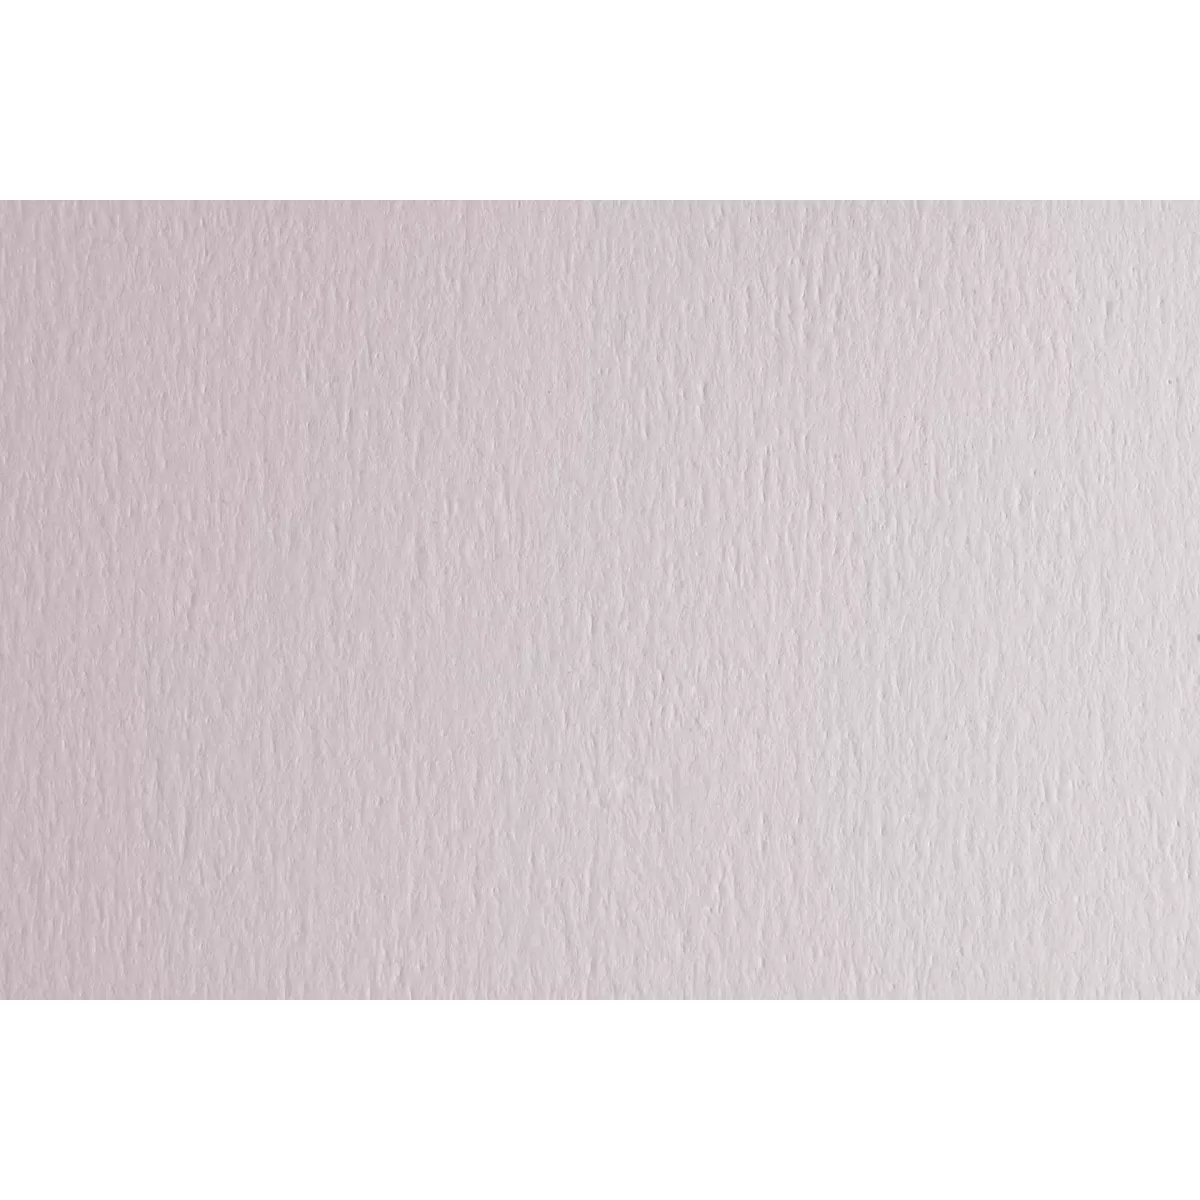 Fabriano Картон Colore, 70 x 100 cm, 140 g/m2, № 220, бял